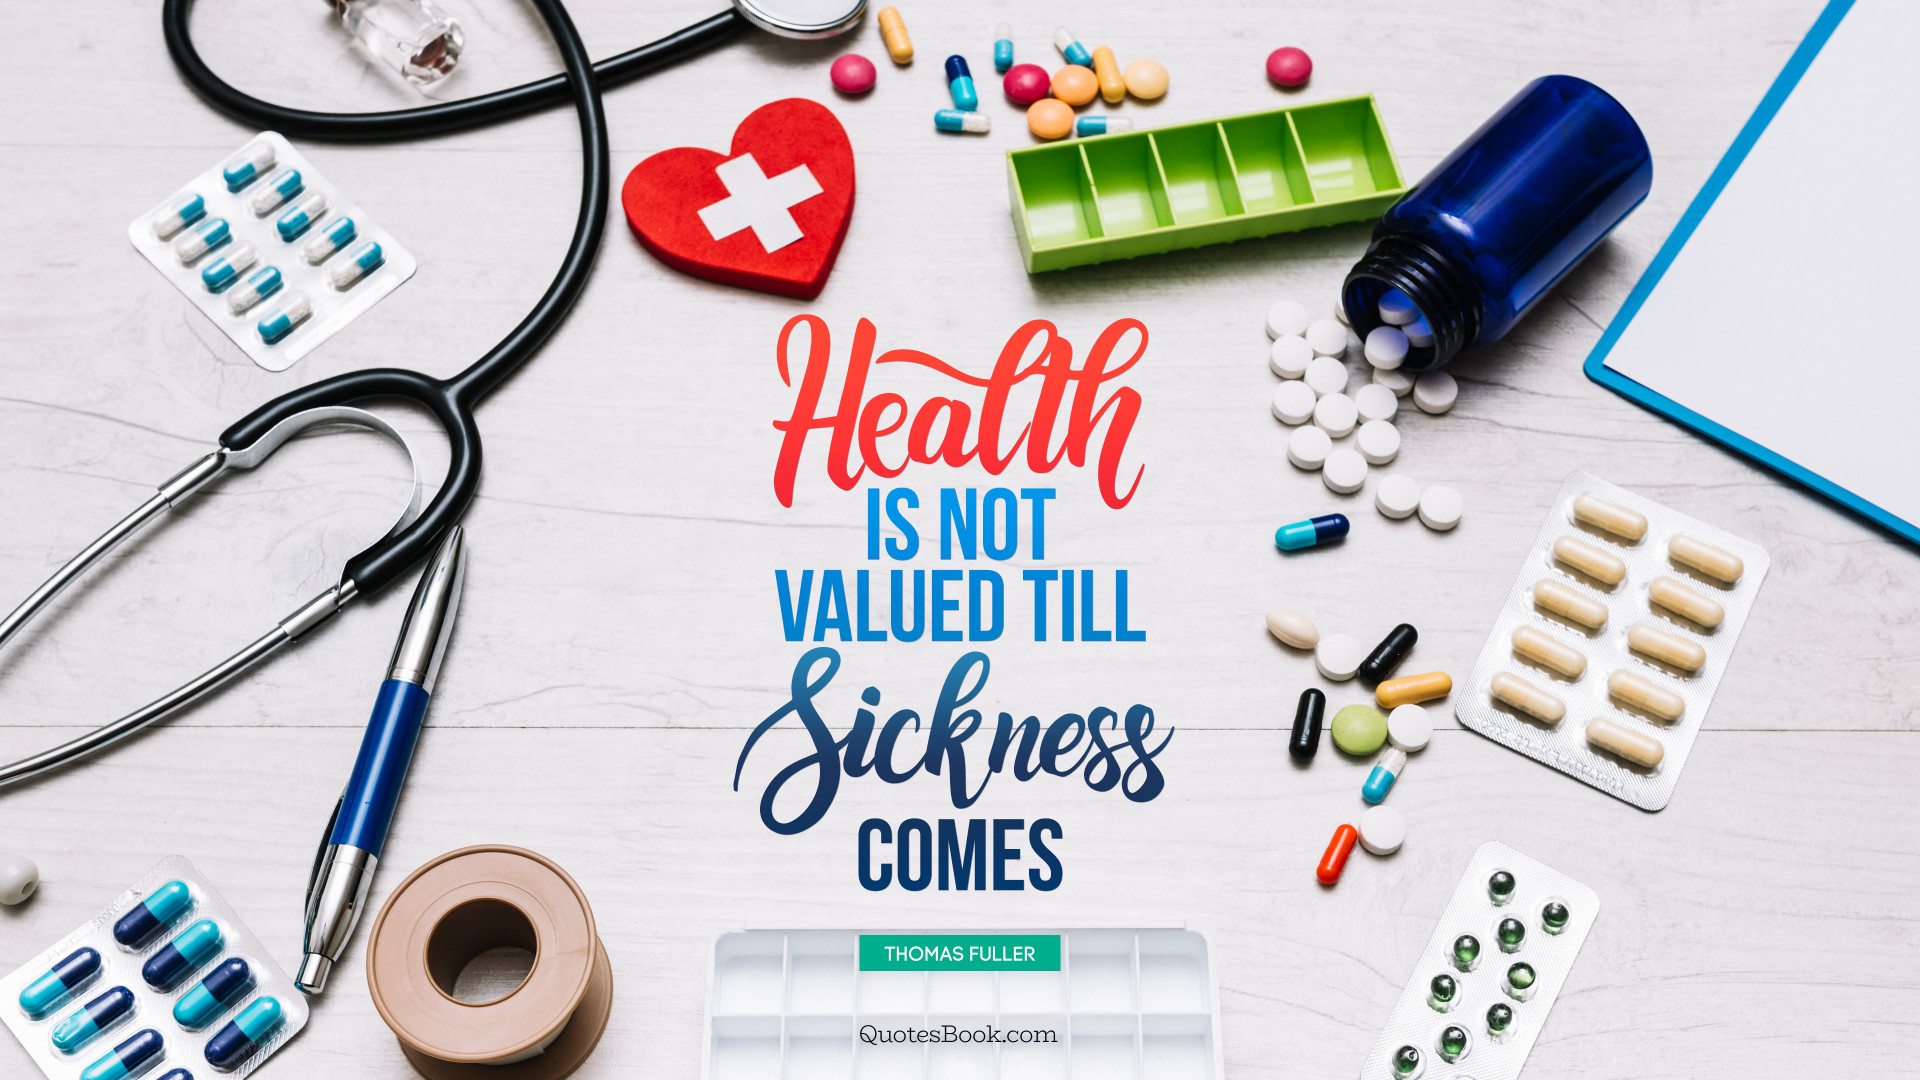 Not enough values. Health is not valued till Sickness comes. Атрибуты терапевта. Надпись Sickness. Health.